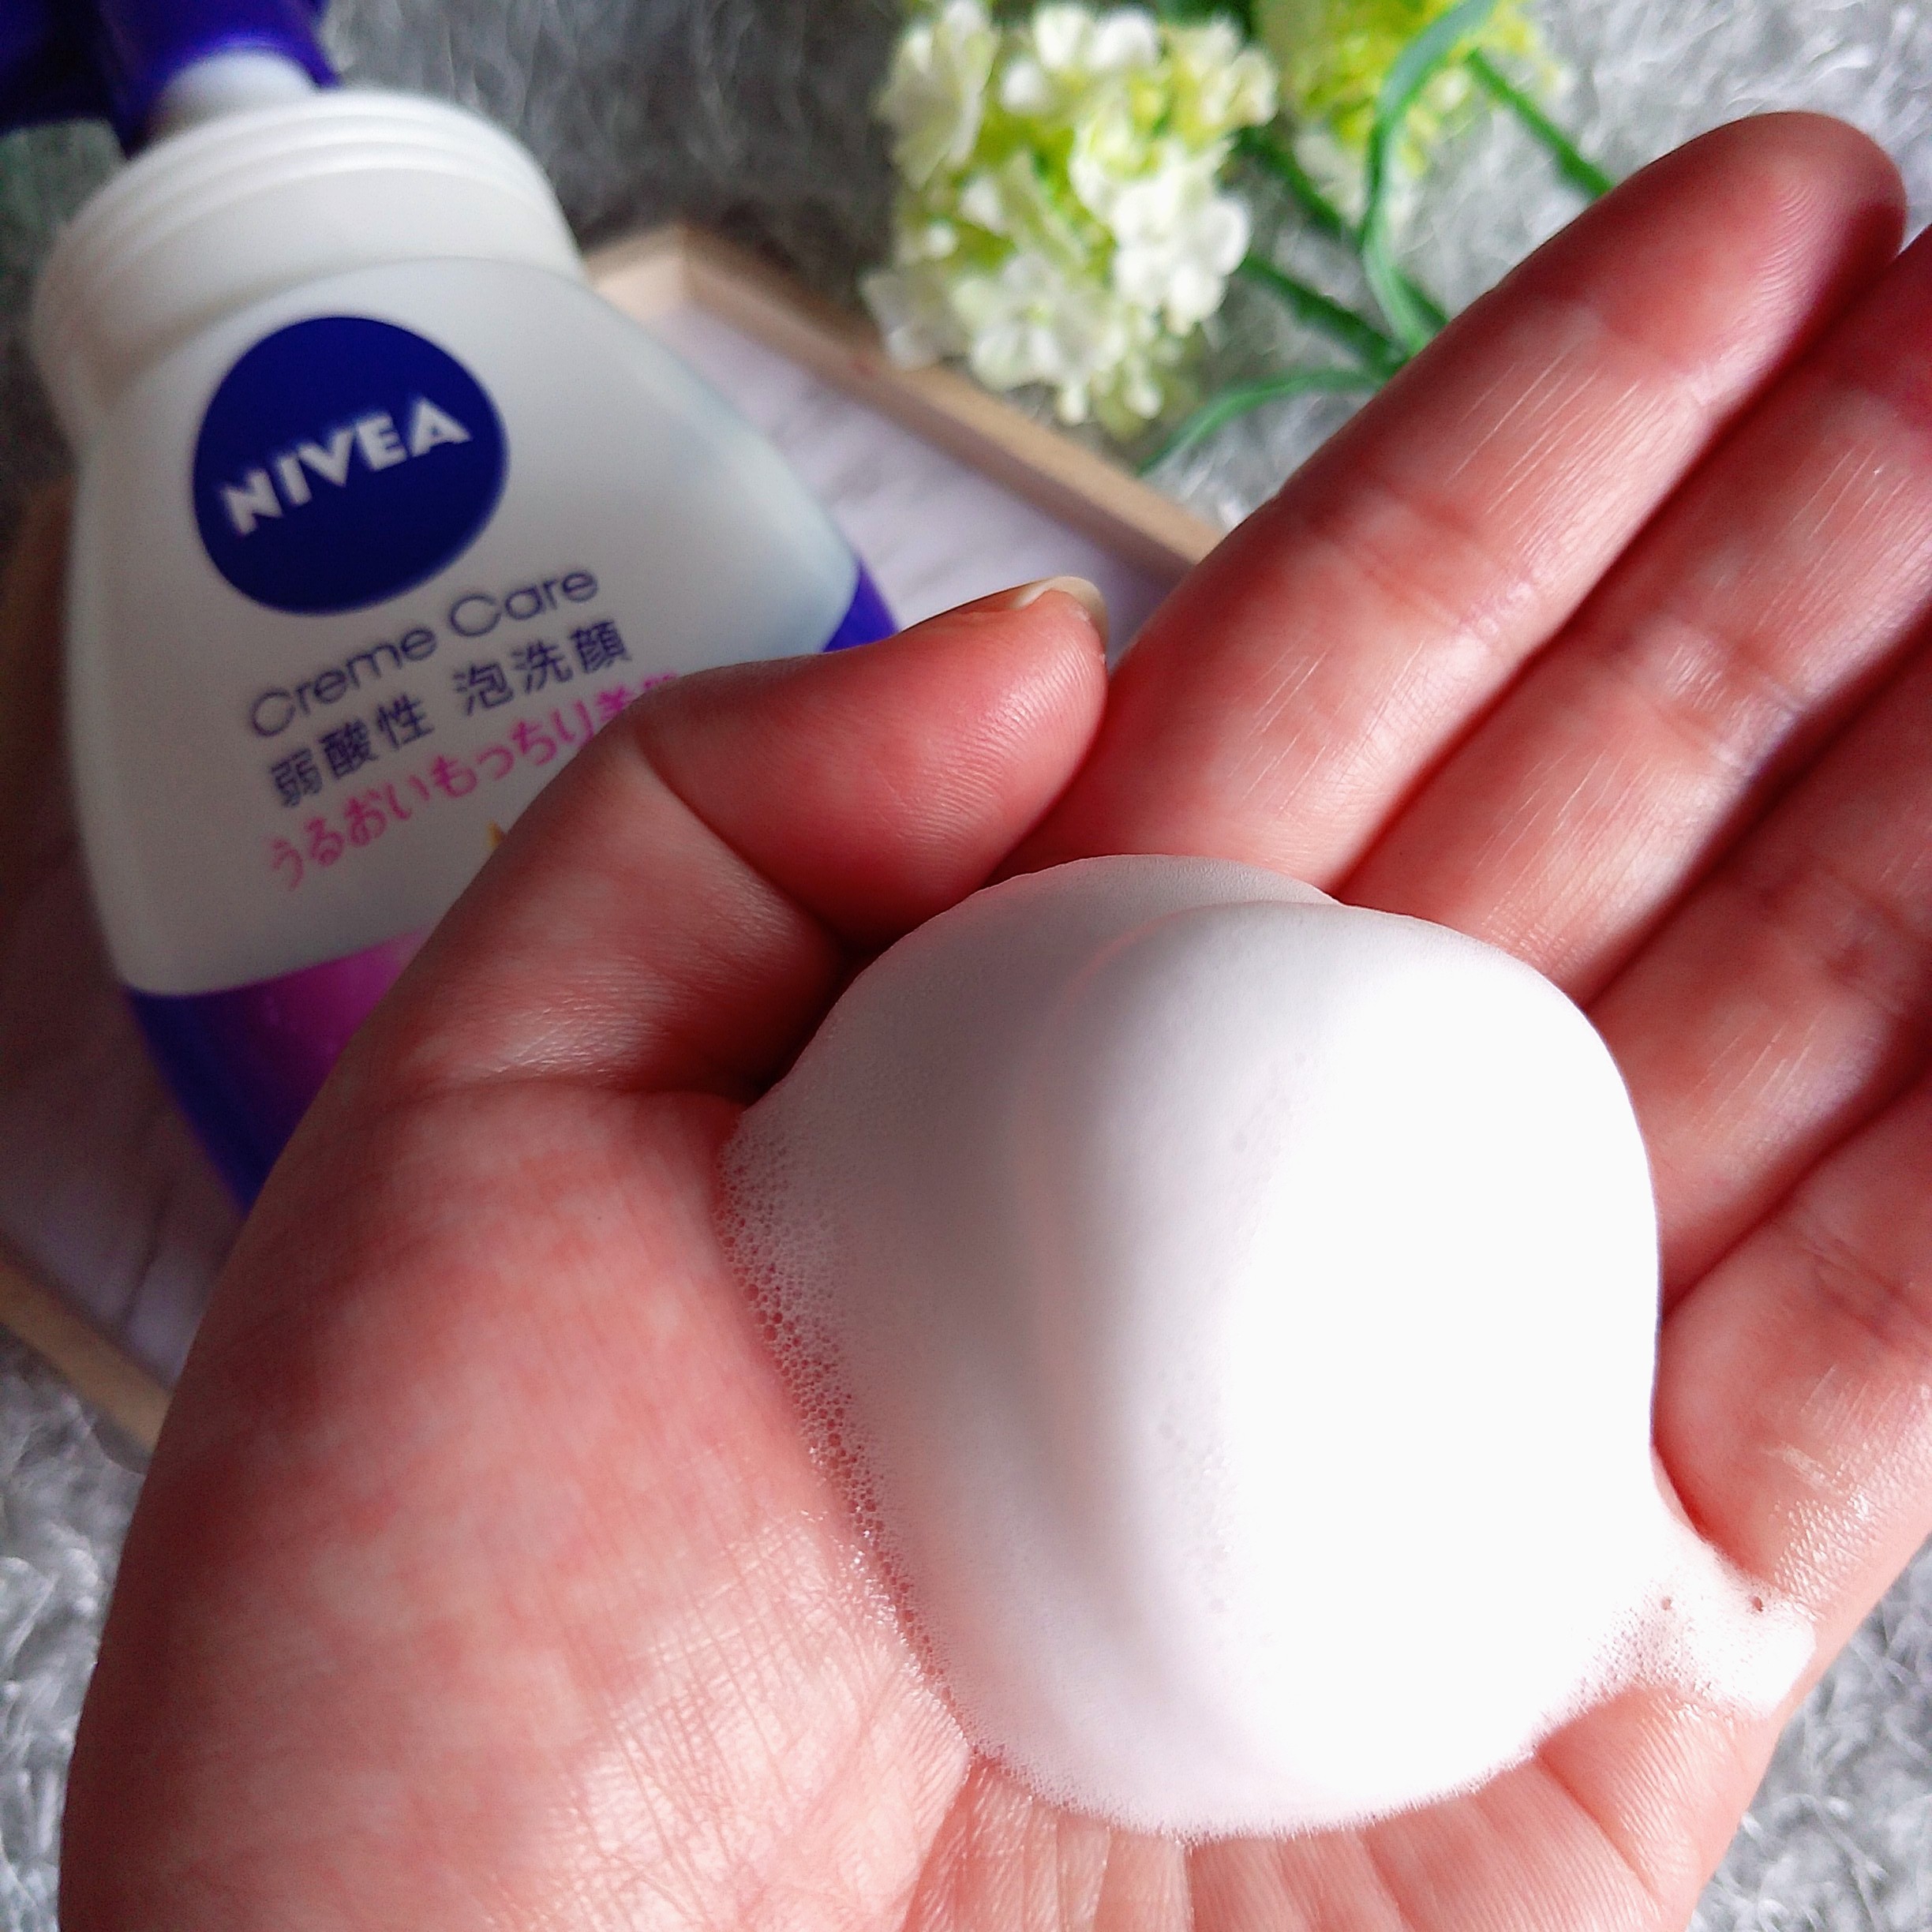 NIVEA(ニベア) クリアビューティー弱酸性泡洗顔 もっちり美肌の良い点・メリットに関するまるもふさんの口コミ画像3